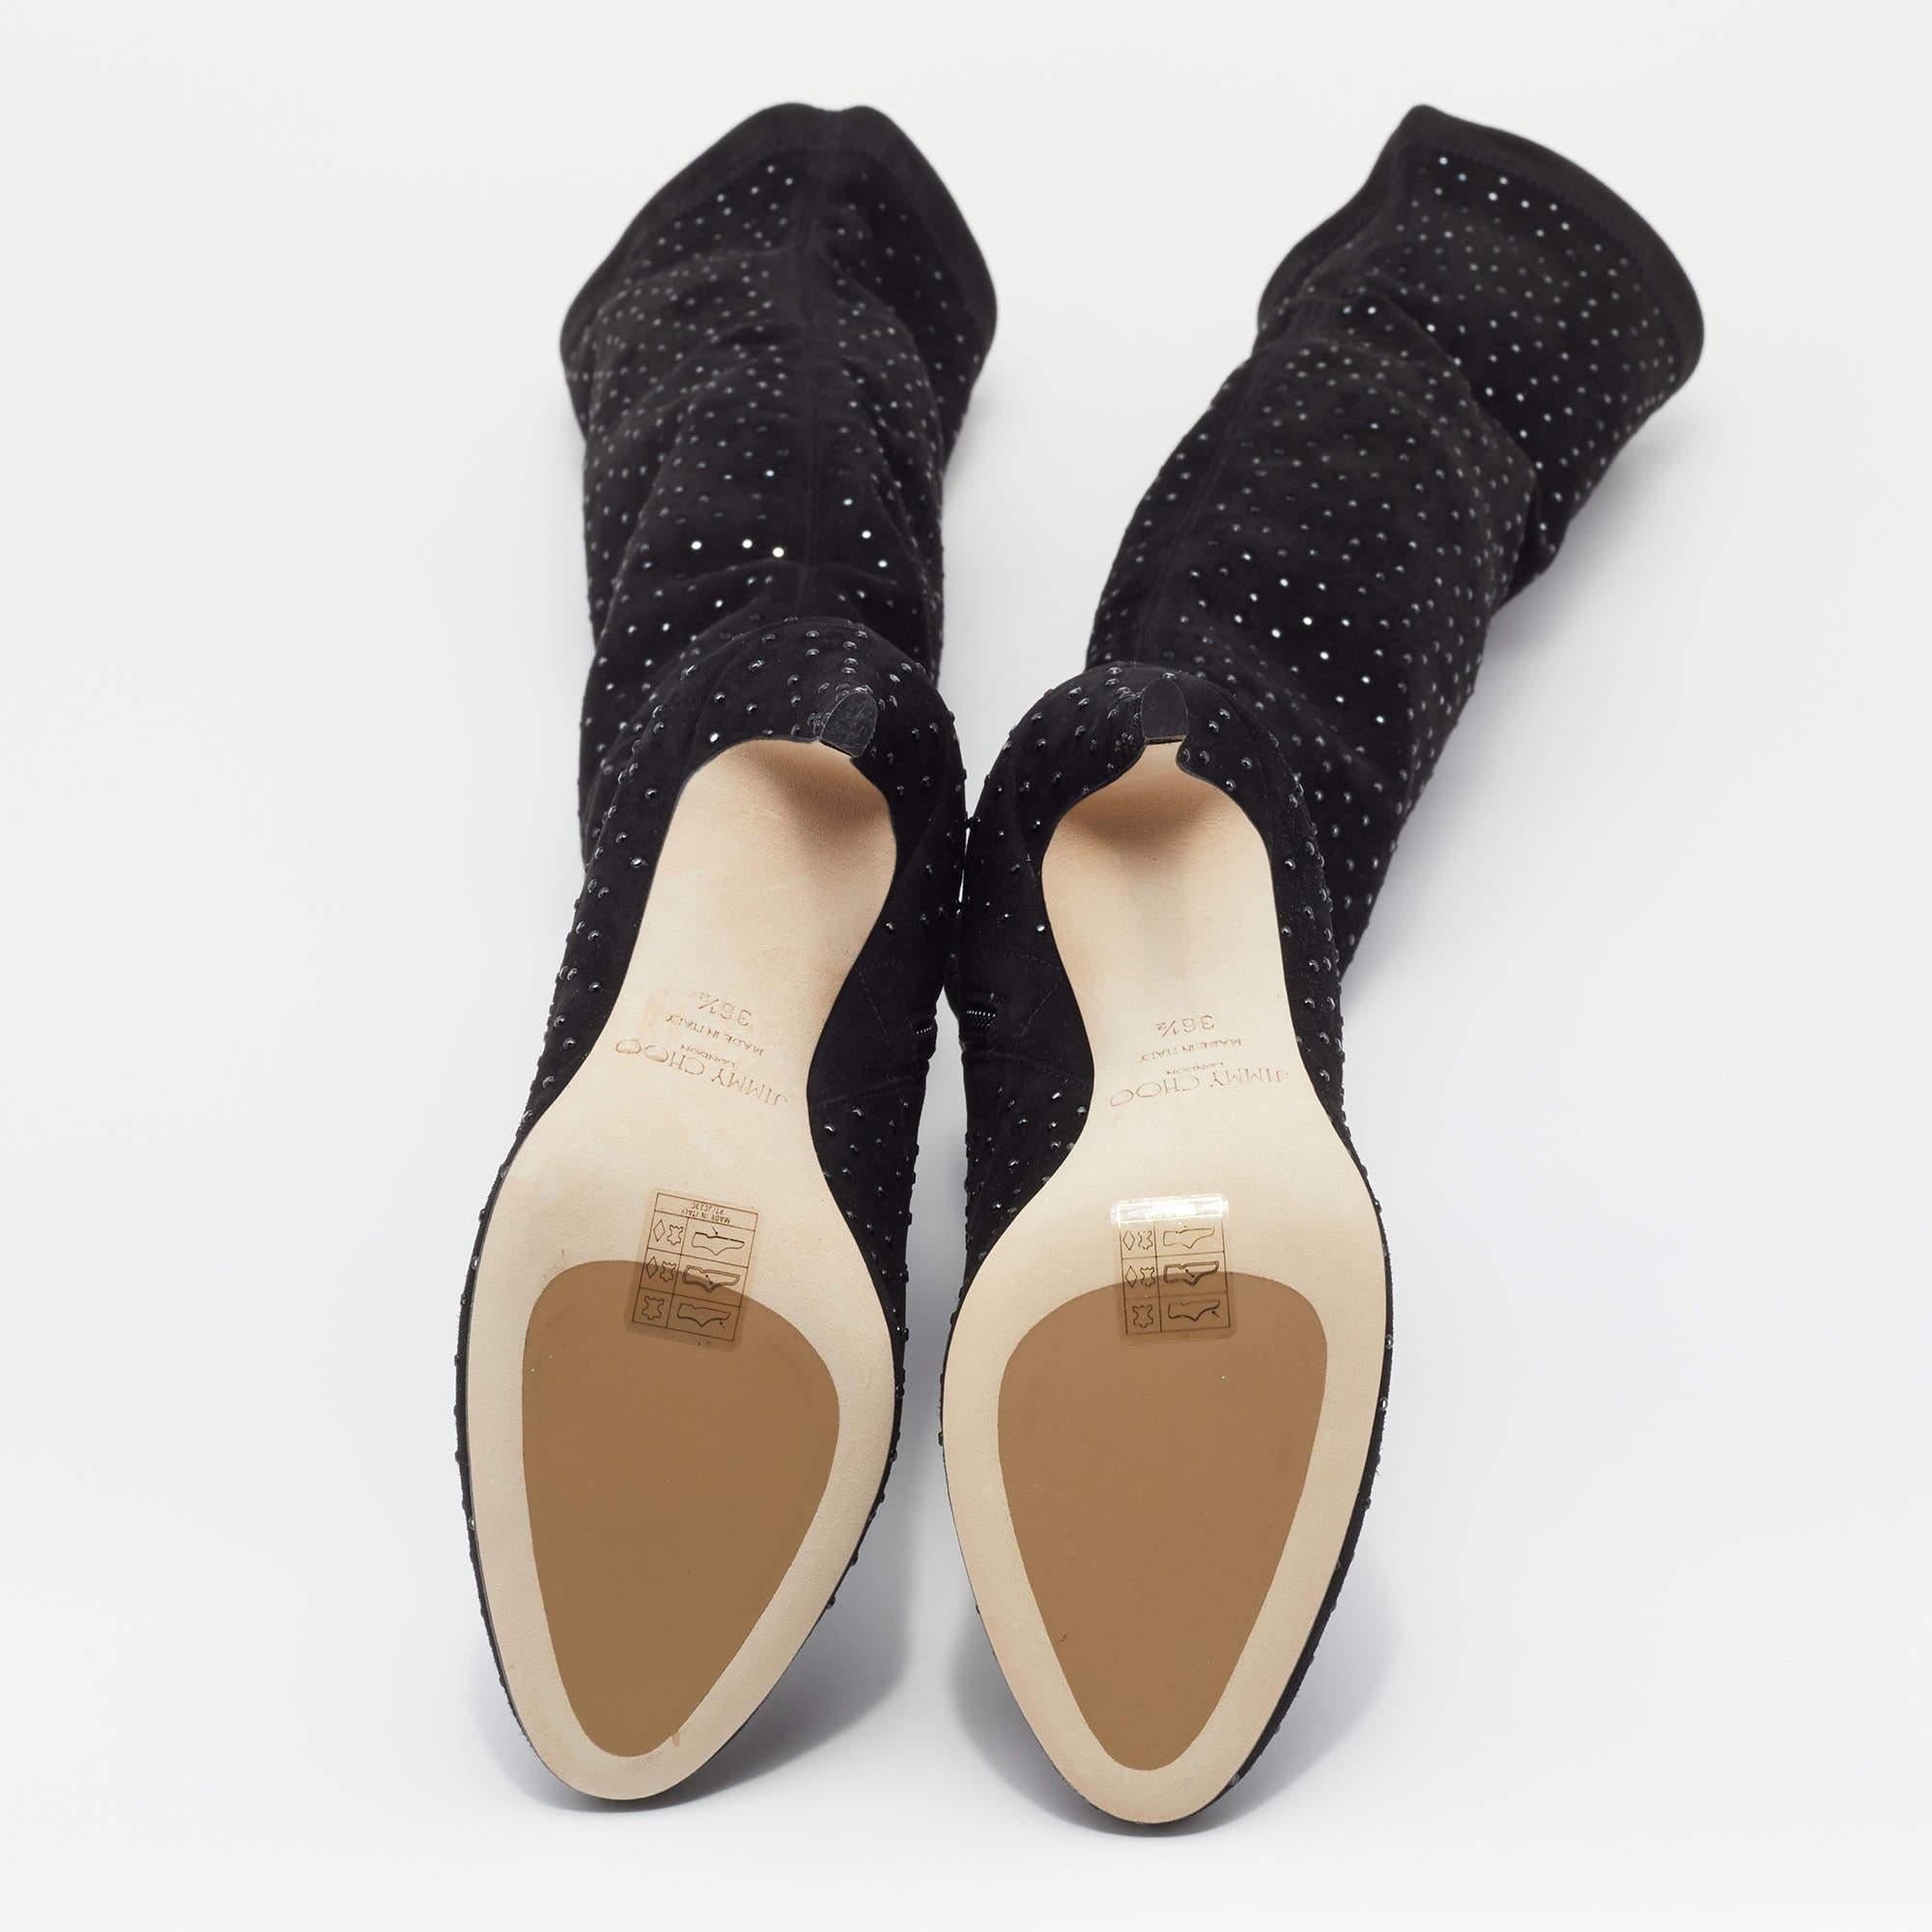 Jimmy Choo Black Stretch Fabric Toni Crystal Embellished Thigh High Boots Size 3 3